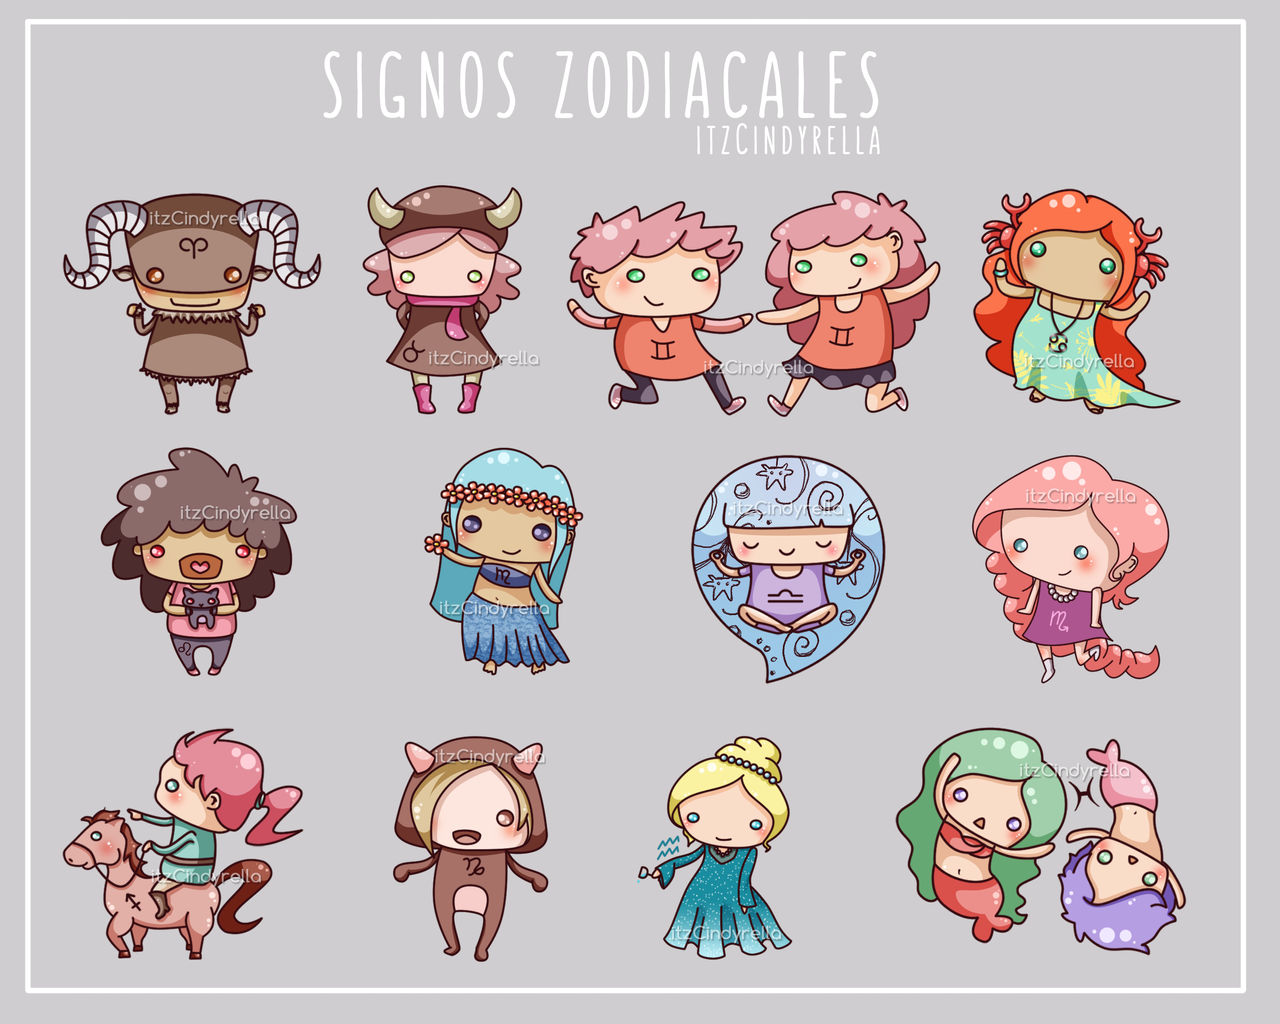 Signos Zodiacales by itz-Cindyrella on DeviantArt